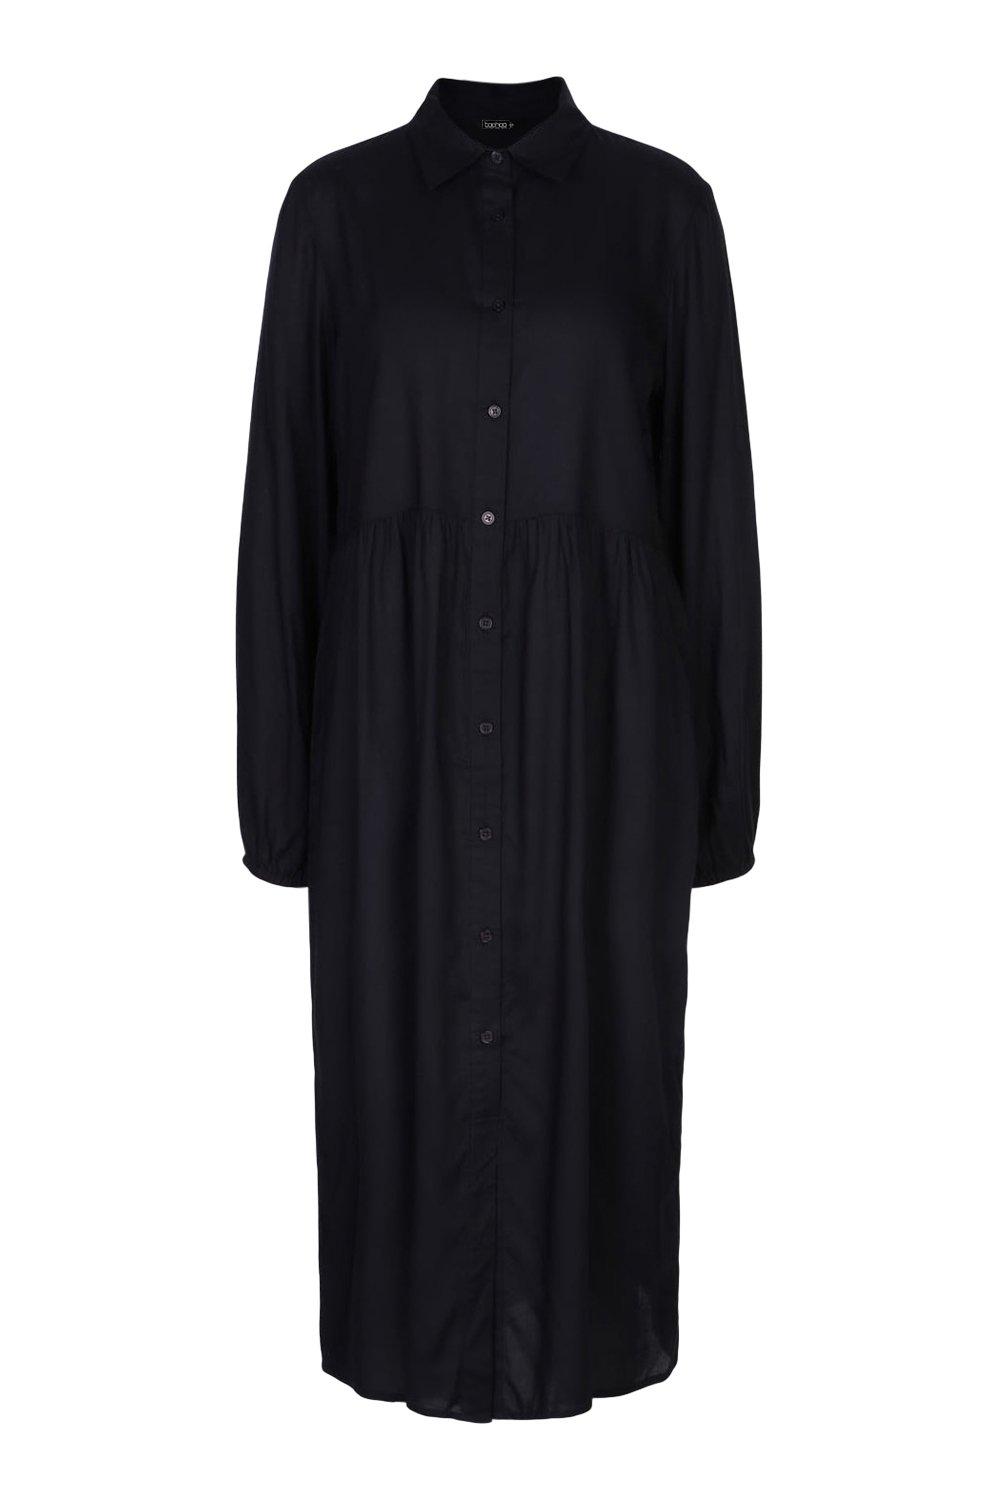 LaovanIn Women's Oversize Tunic Tops Corduroy Long Sleeve Midi Dresses with  Pockets Black Medium at  Women's Clothing store